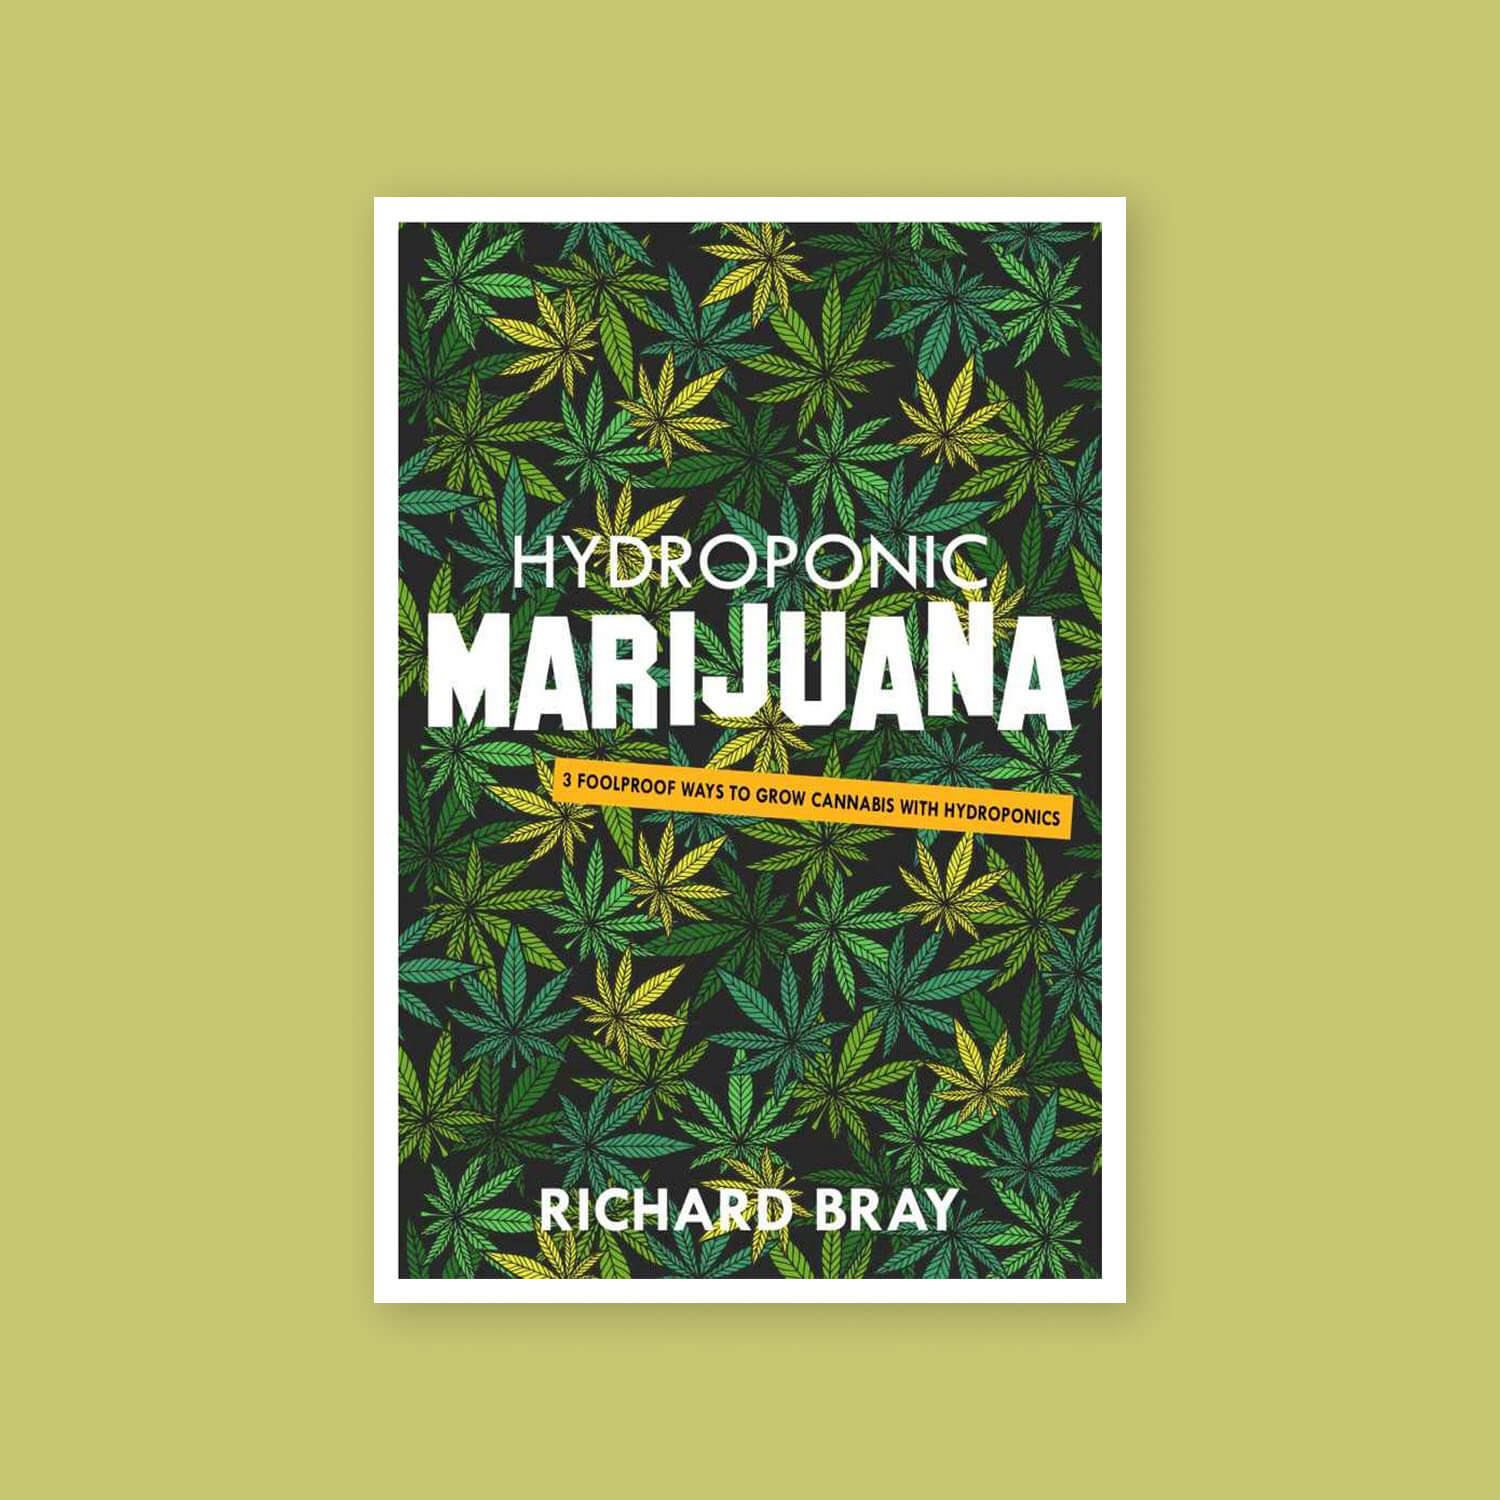 Hydroponic marijuana - Goldleaf bookshelf